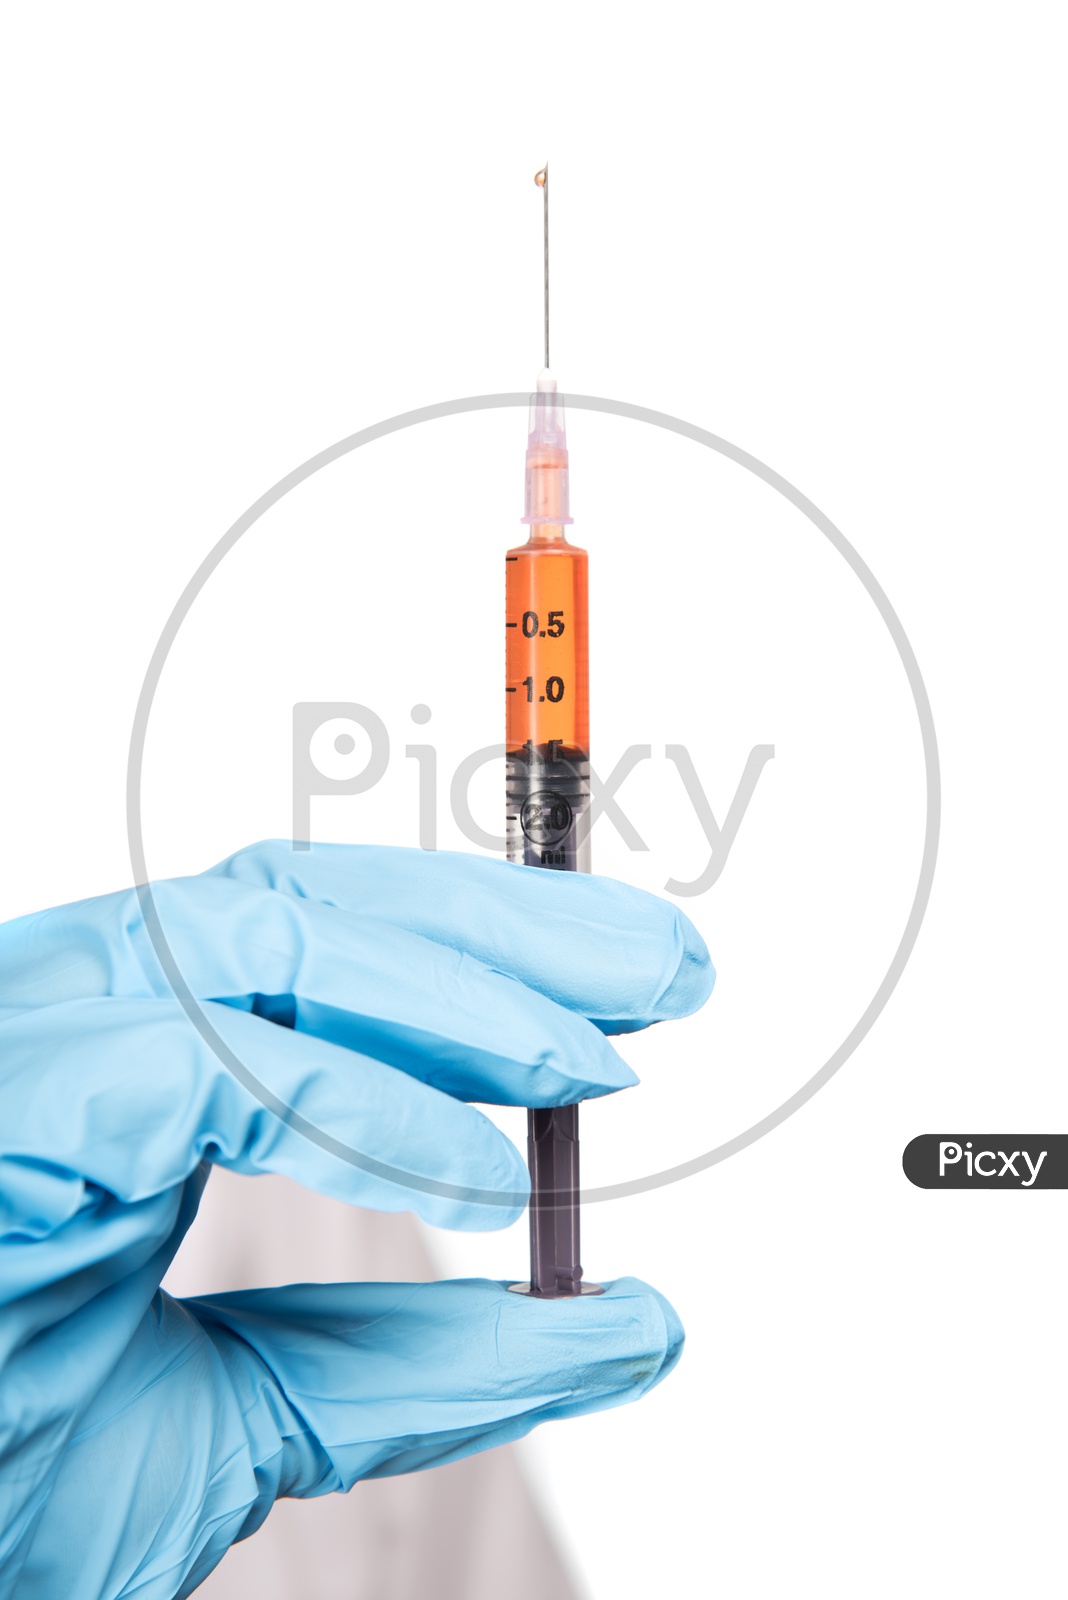 A loaded syringe